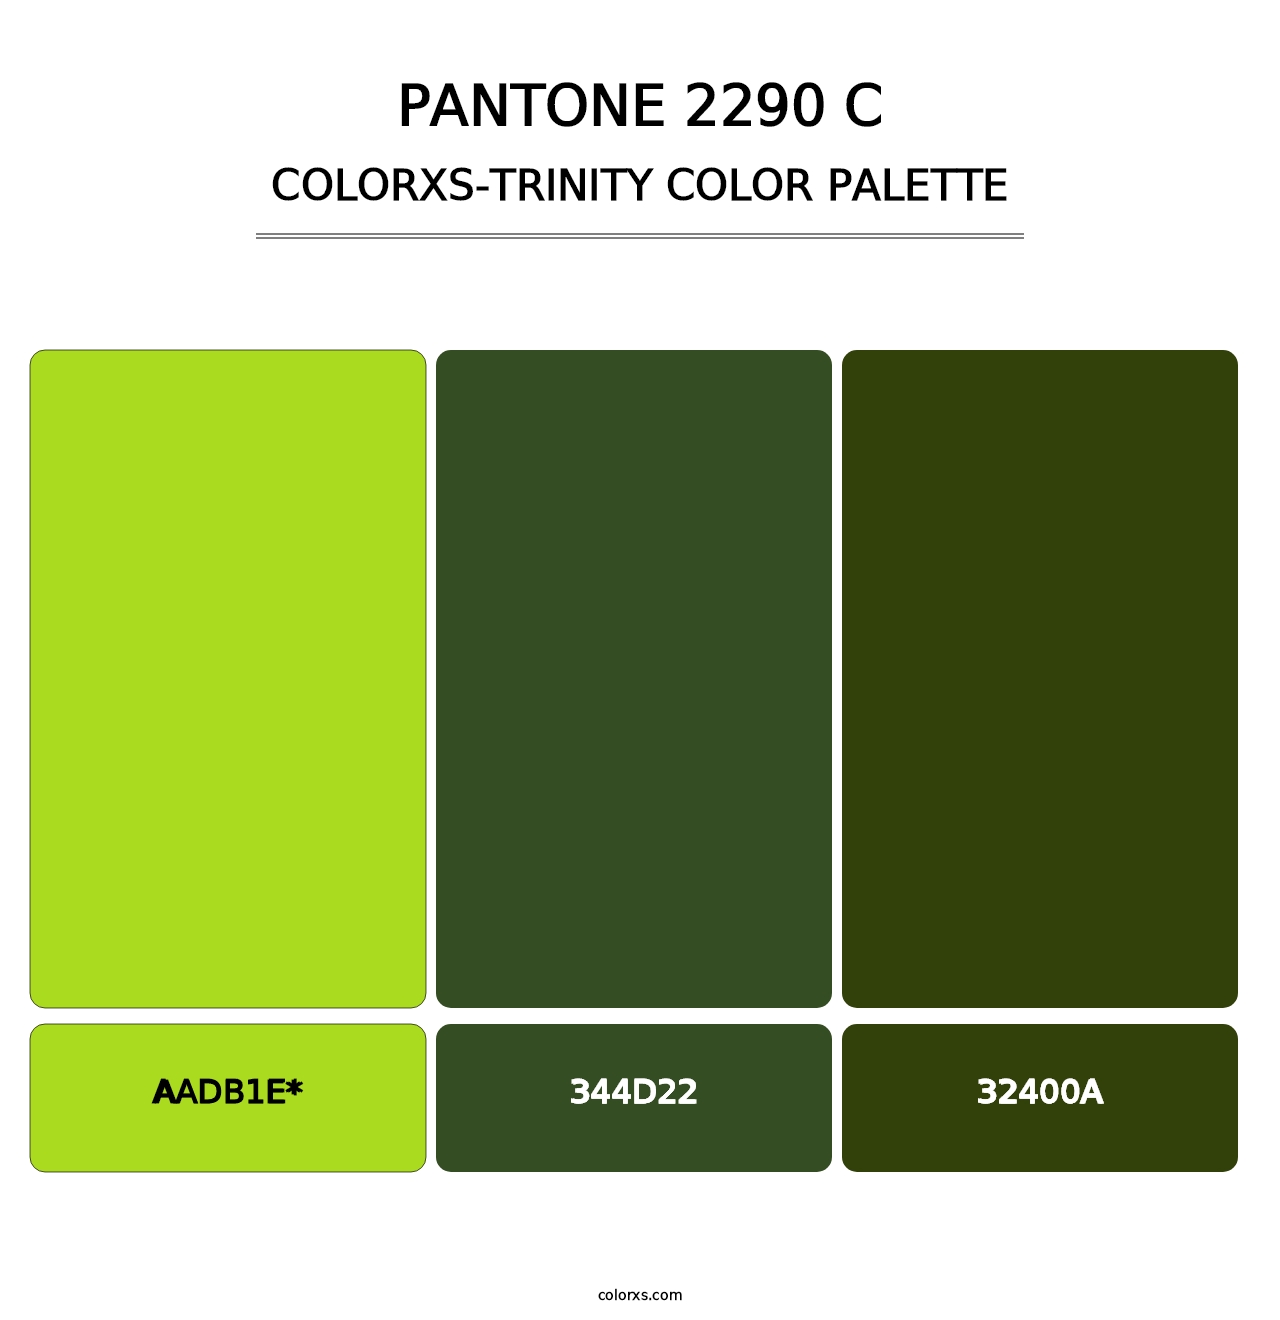 PANTONE 2290 C - Colorxs Trinity Palette